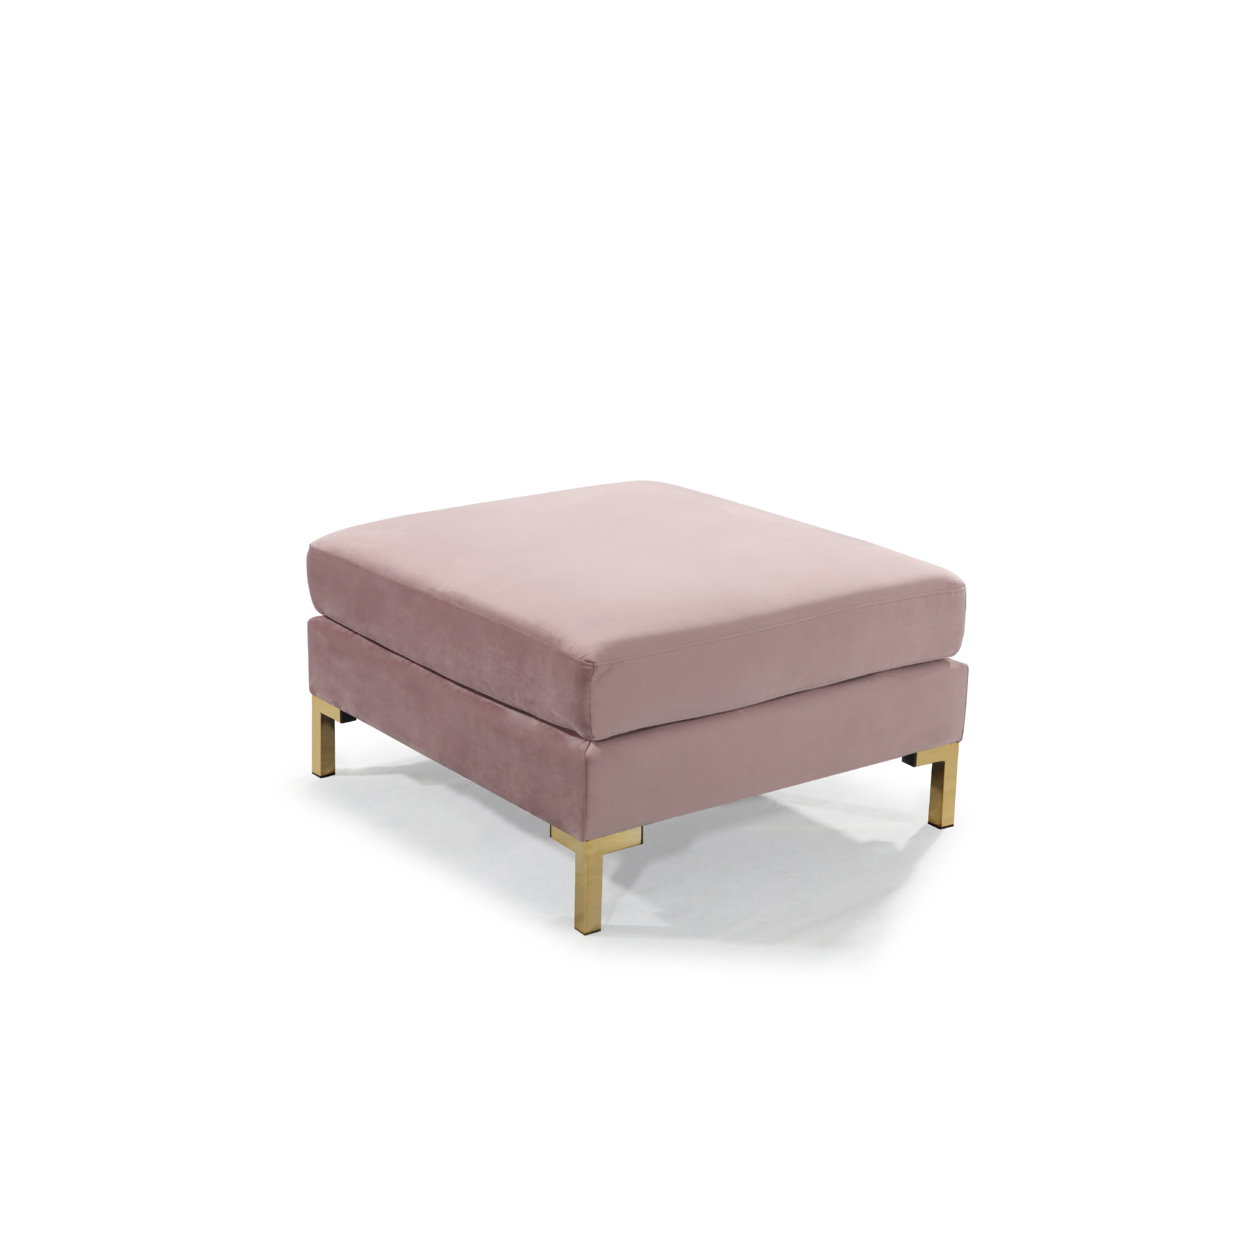 Greco Modular Chaise Ottoman Coffee Table Cushion Bench Solid Gold Tone Metal Y-Leg - Blush